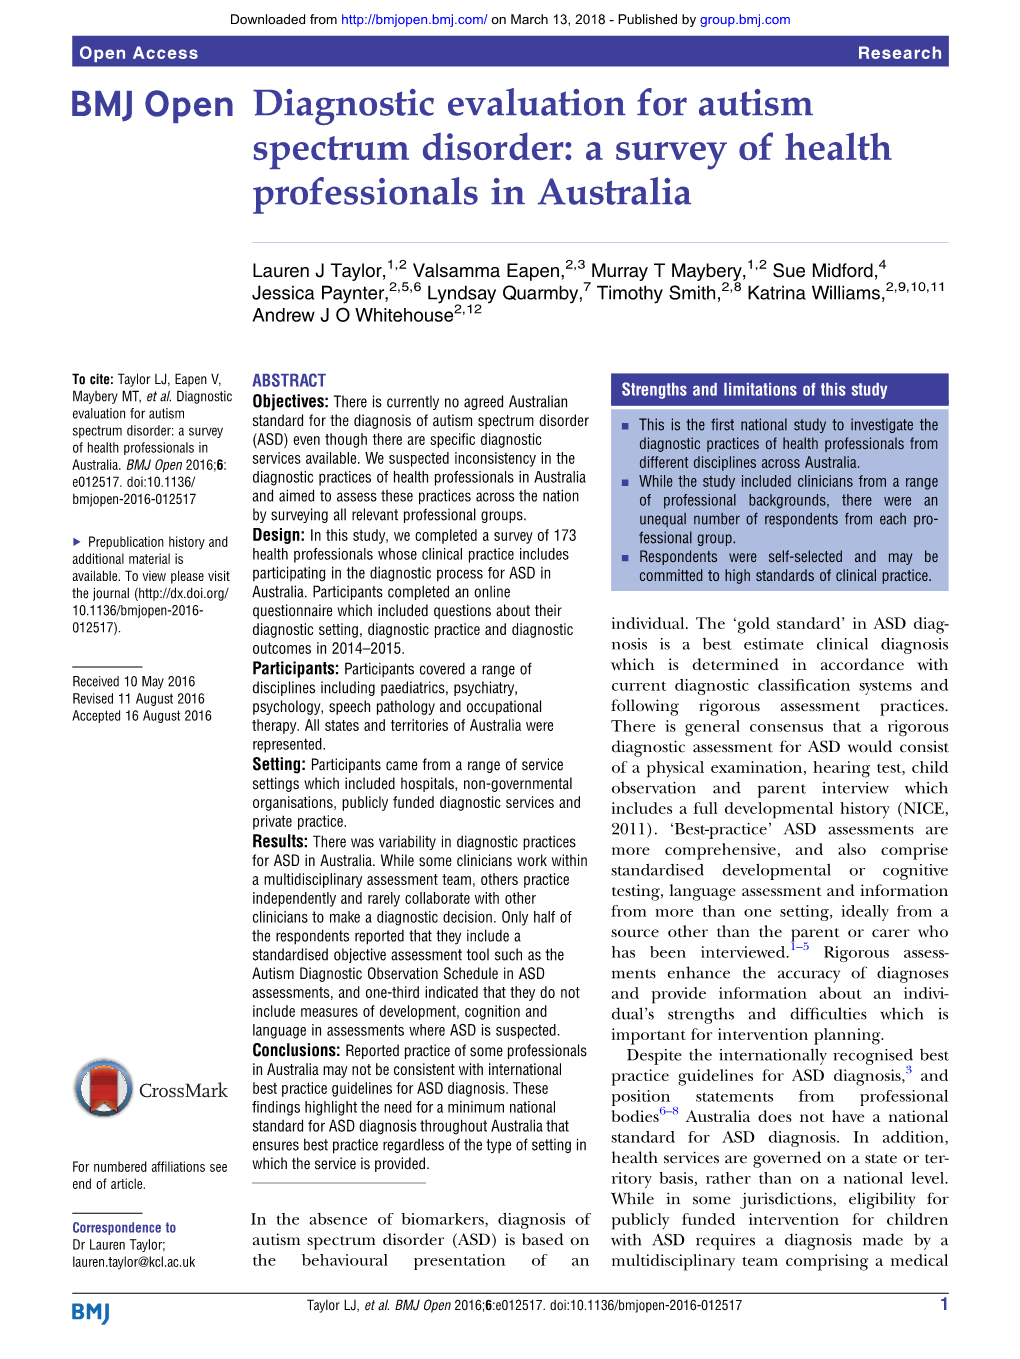 Diagnostic Evaluation for Autism Spectrum Disorder: a Survey of Health Professionals in Australia